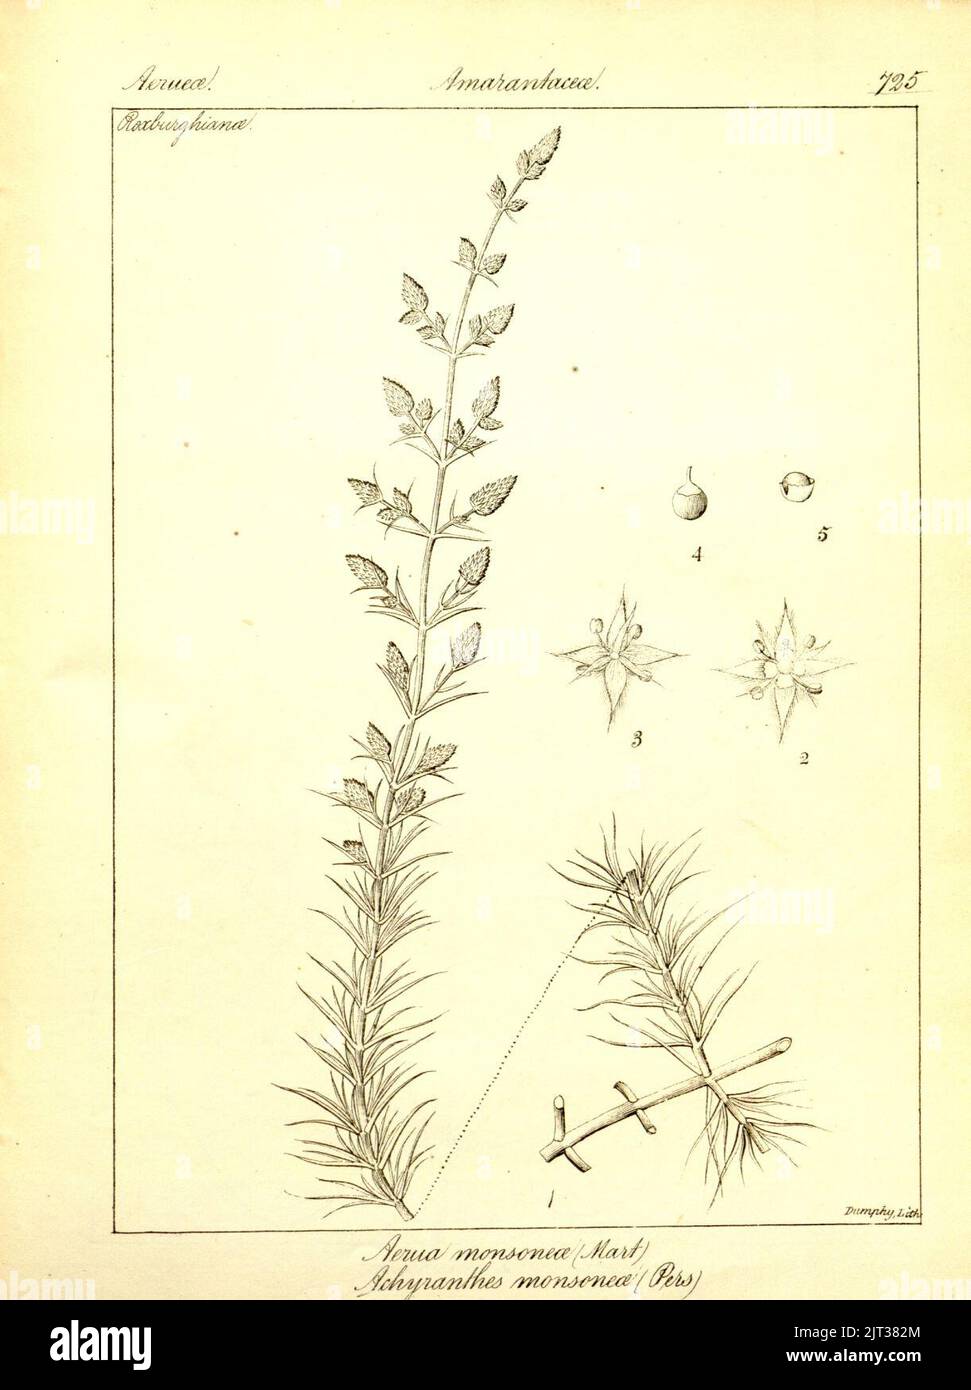 Trichuriella monsoniae as Aerva monsoniae. Stock Photo